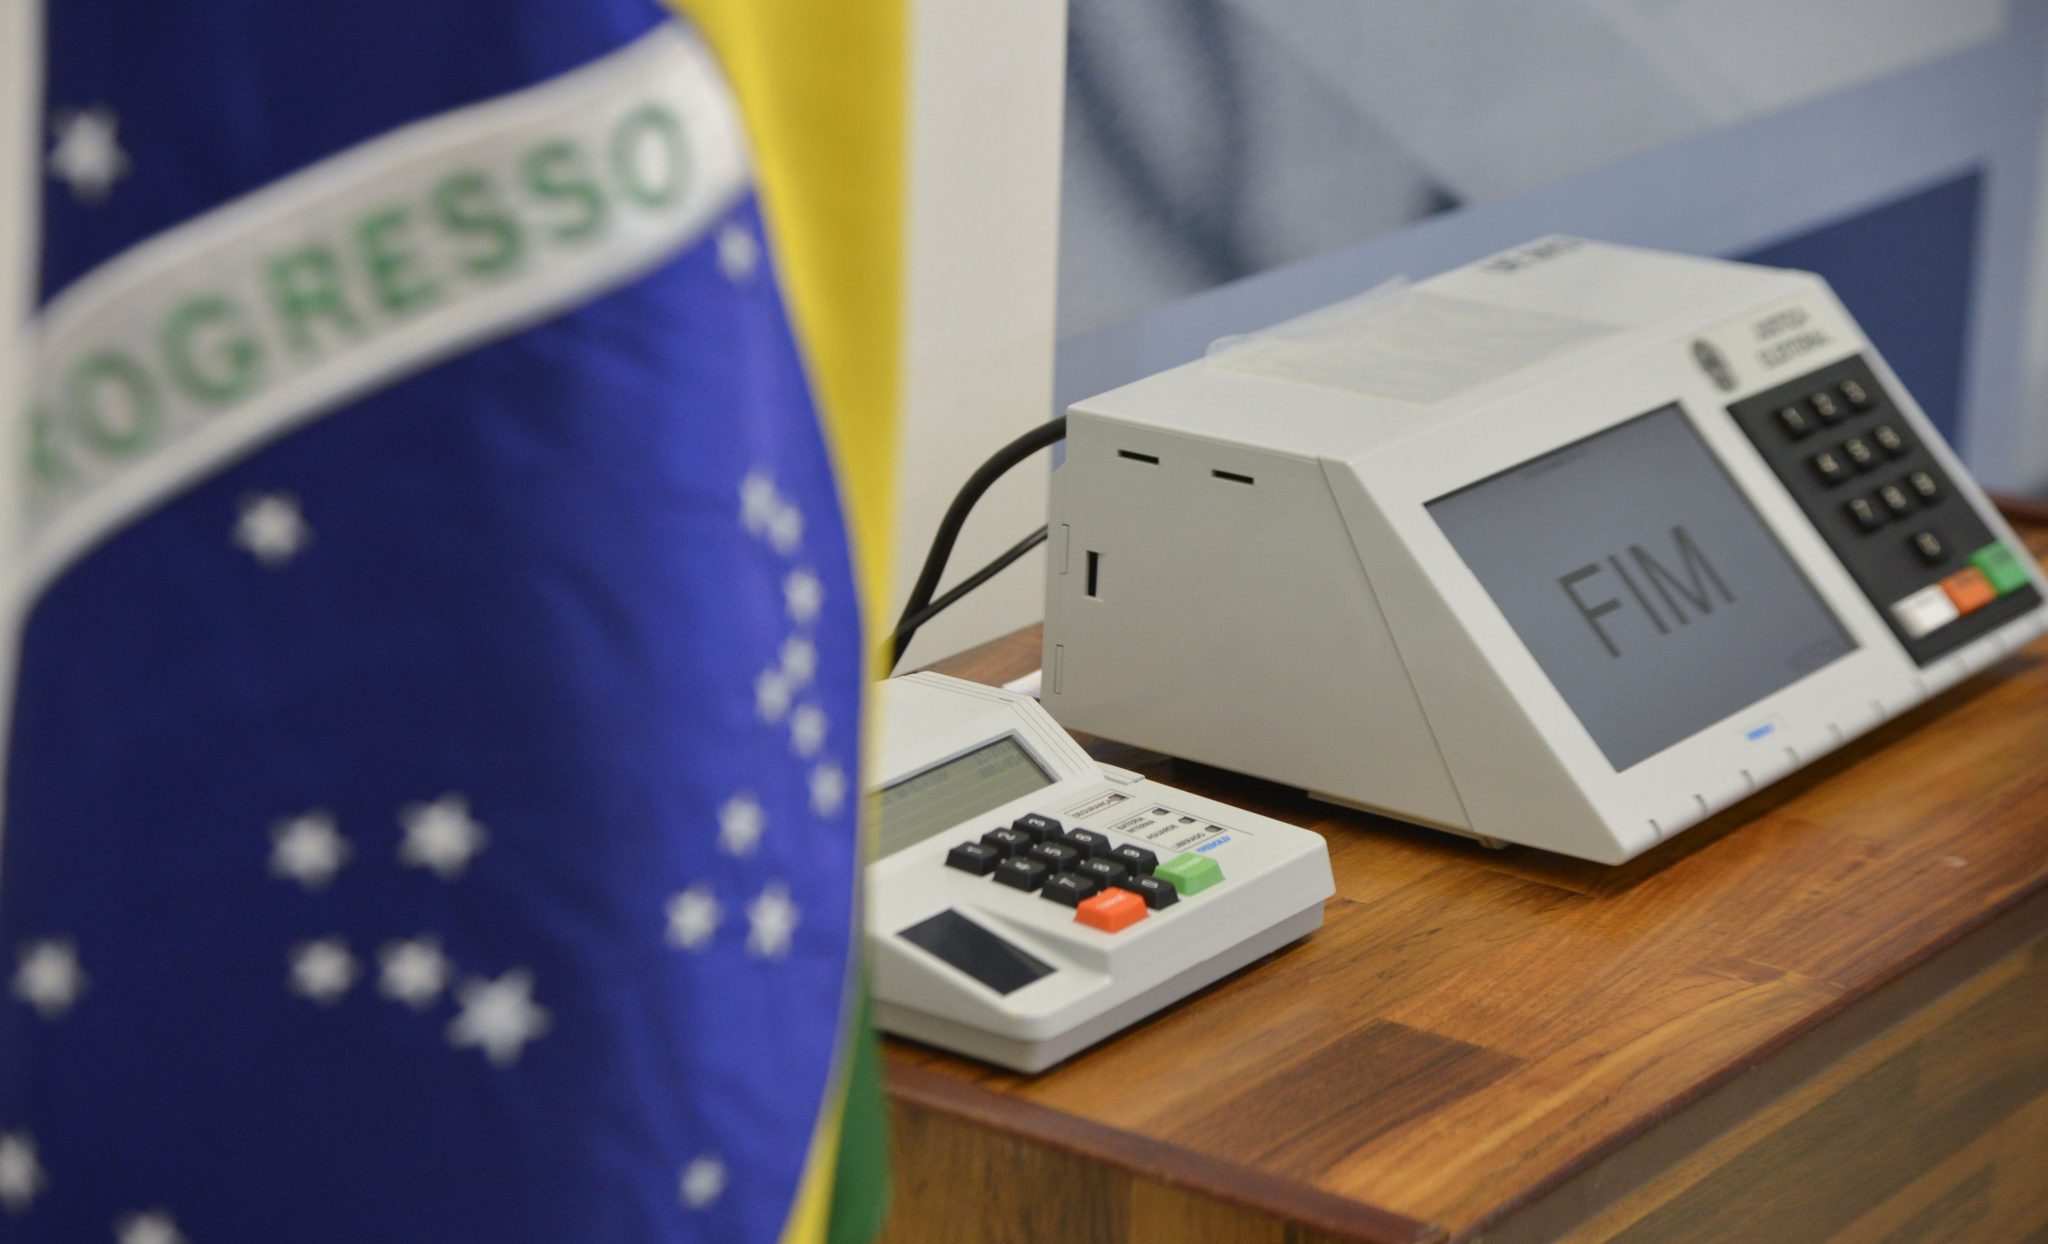 TSE julgará se réus, como Lula e Bolsonaro, podem disputar Presidência